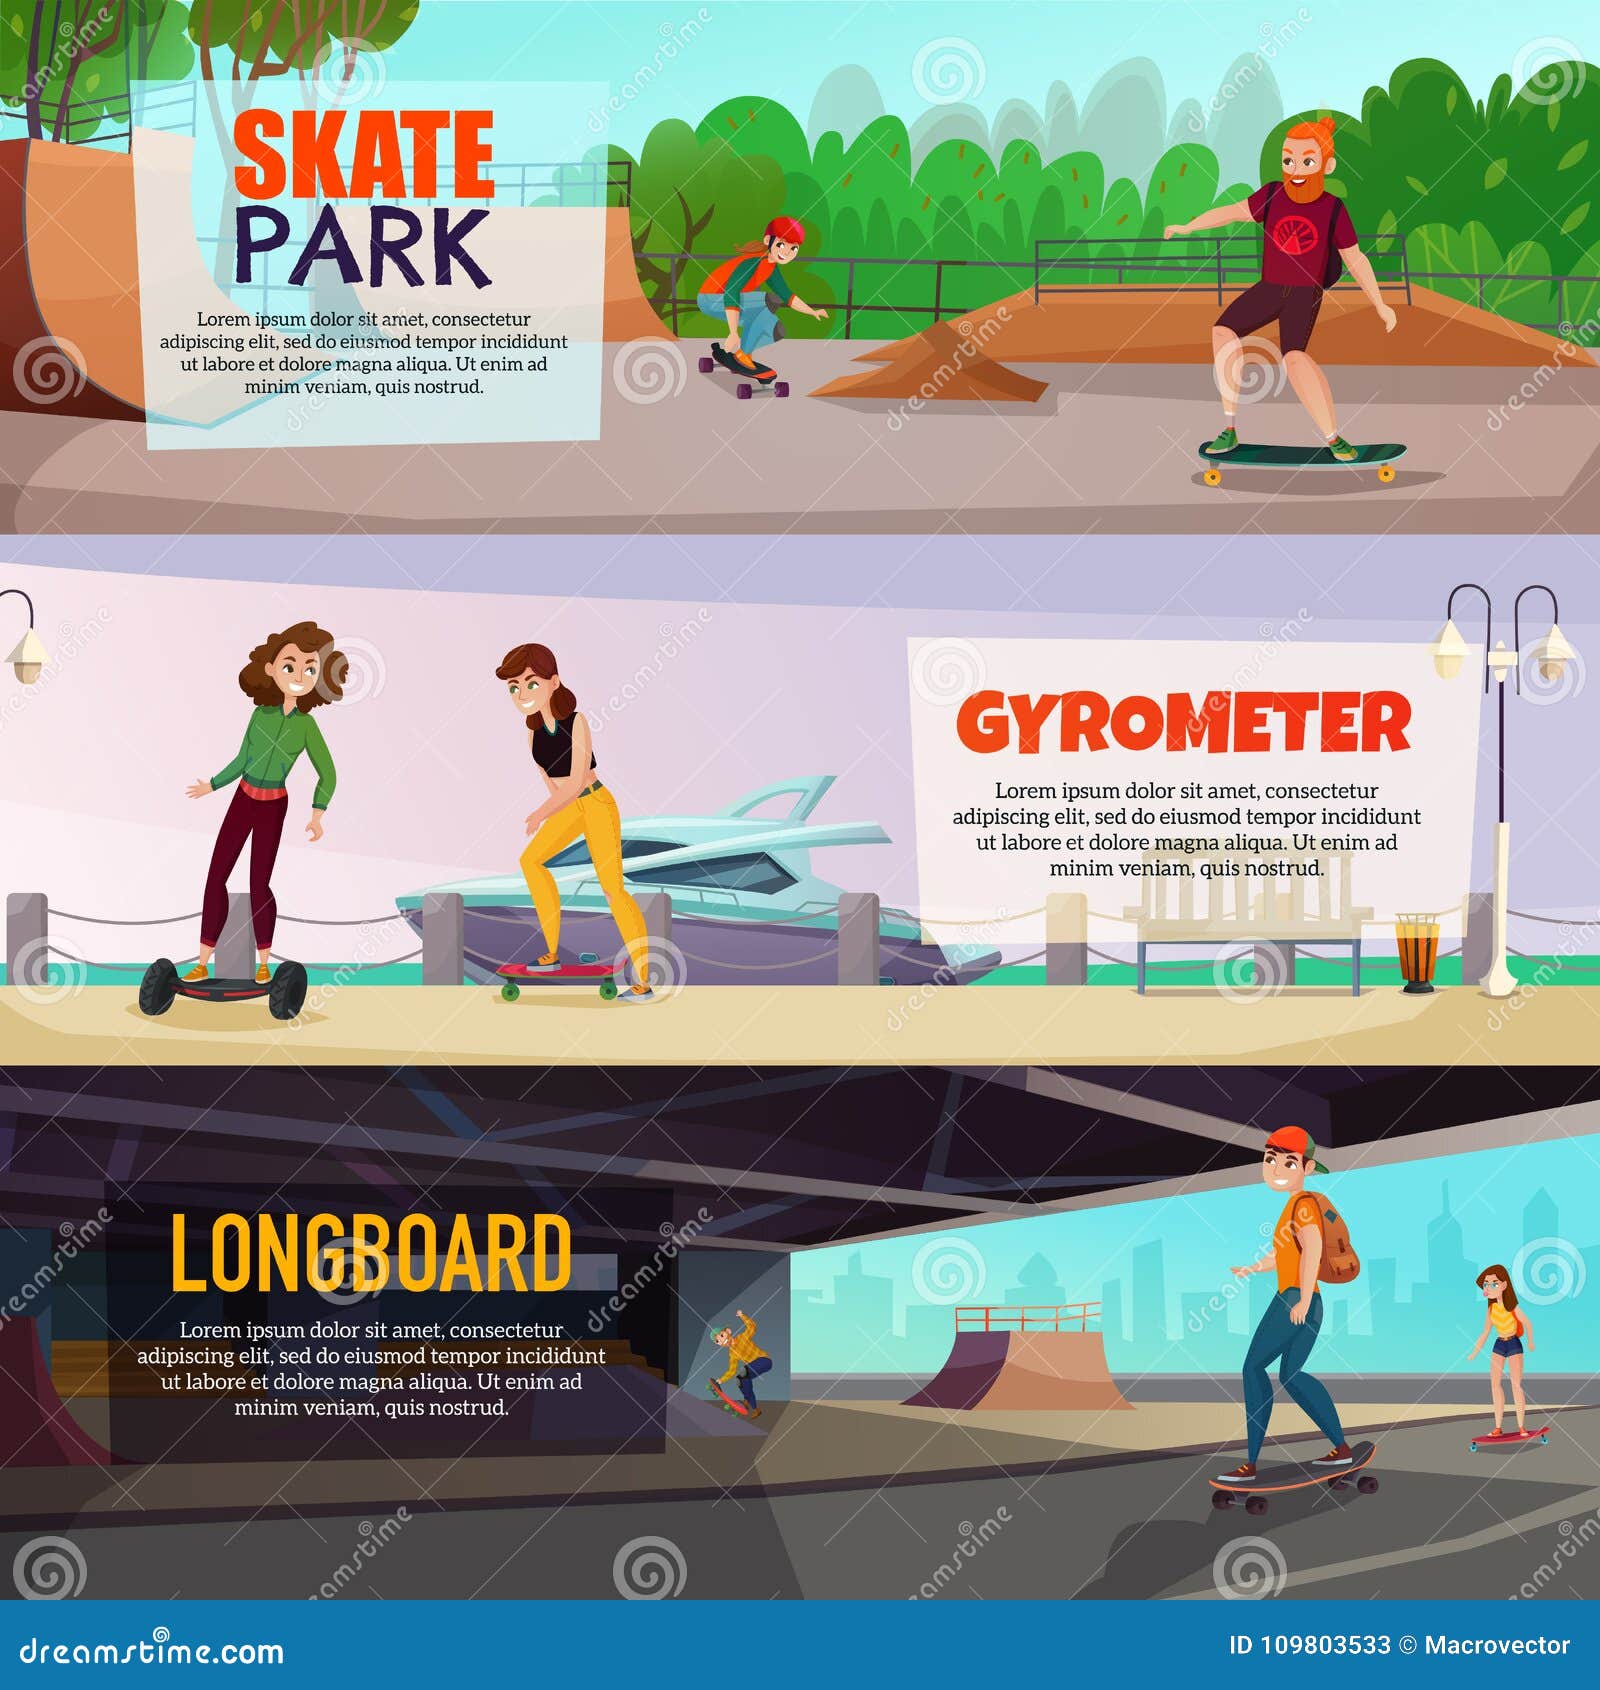 Skateboarding Horizontal Banners Stock Vector - Illustration of background, design: 109803533